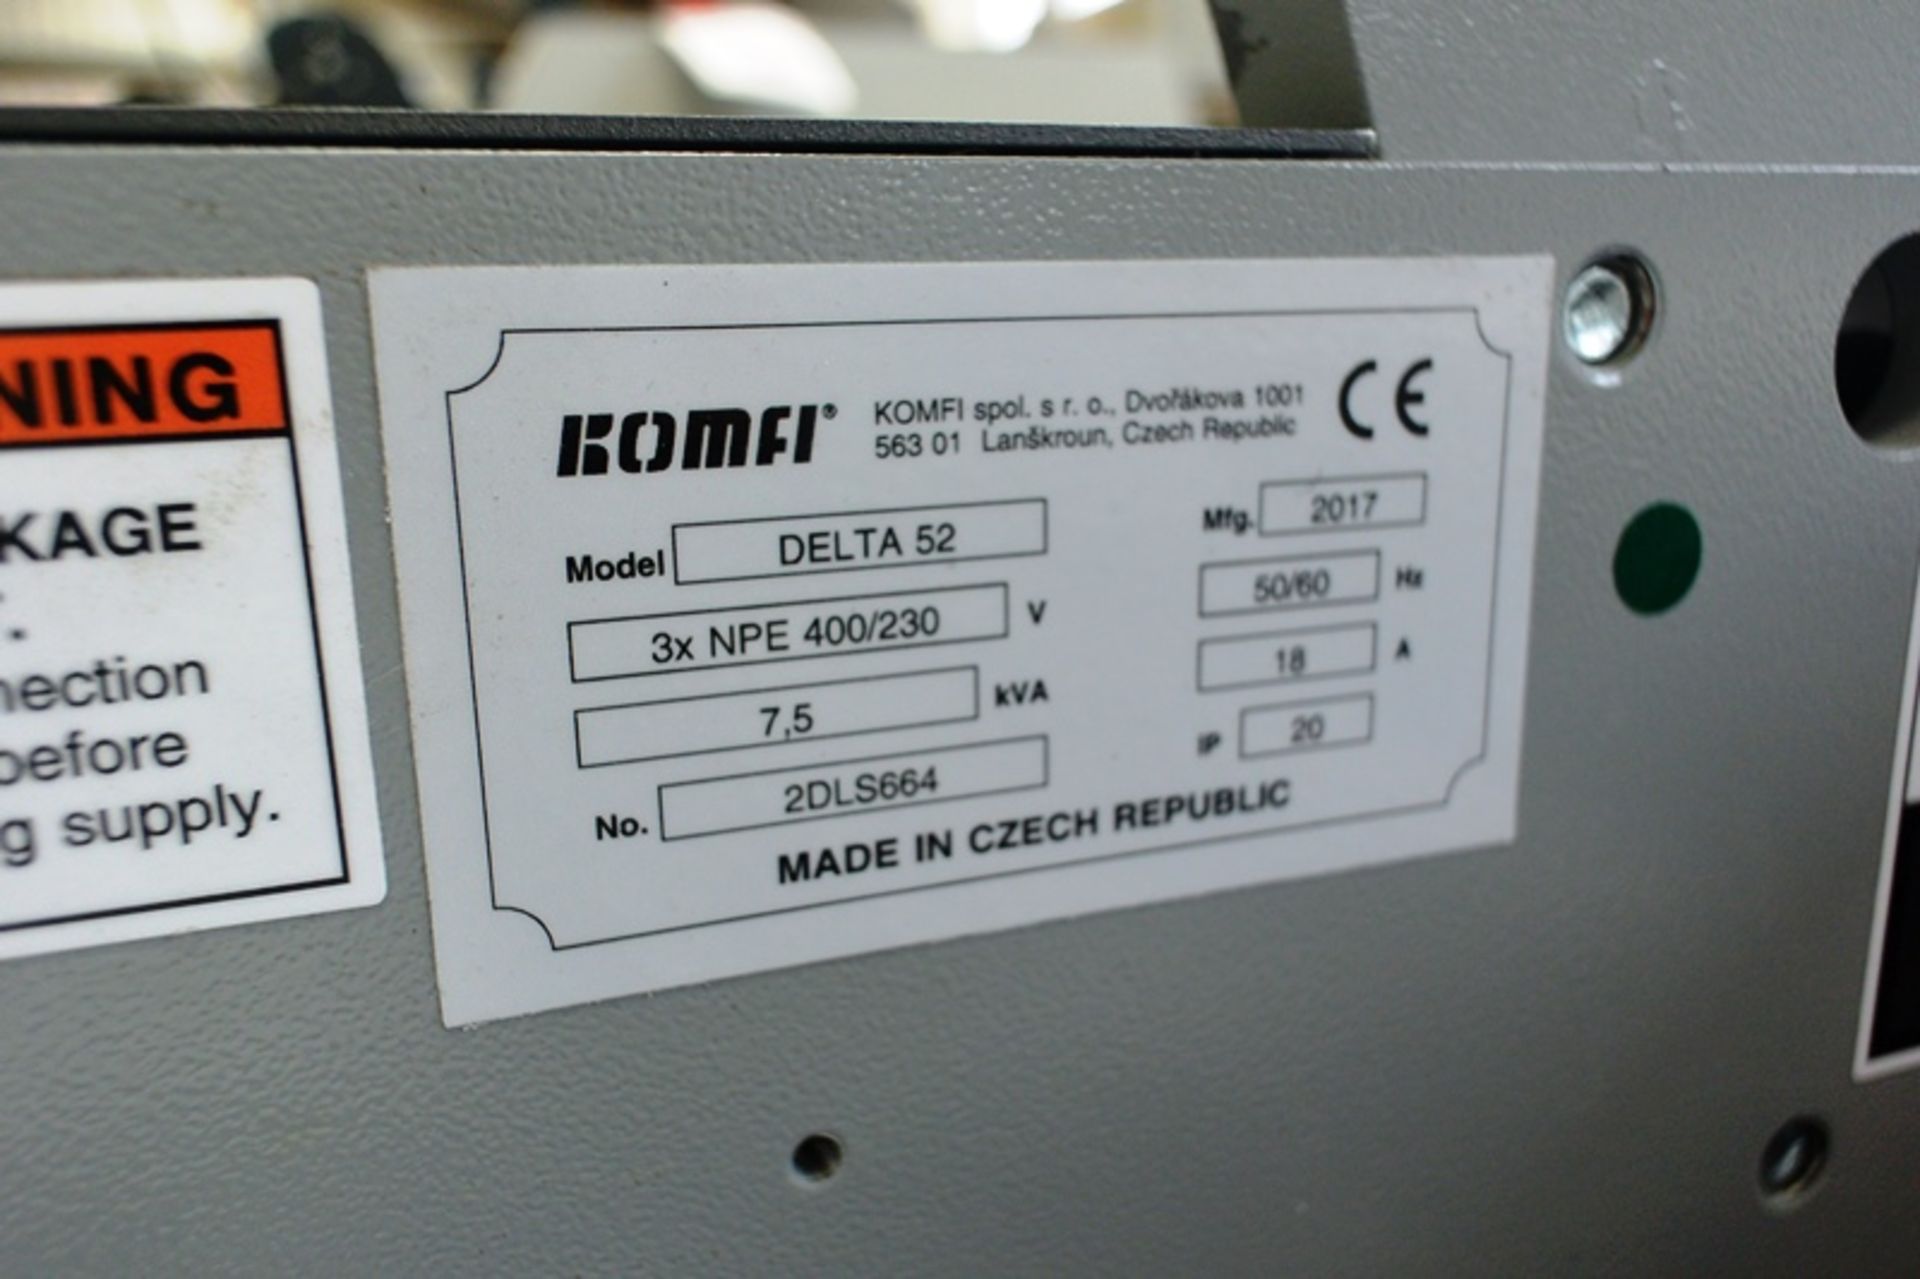 Komfi Delta 52 reel feed thermal laminating machine, serial no. 2DLS664 (2017 - installed 2018), - Image 9 of 11